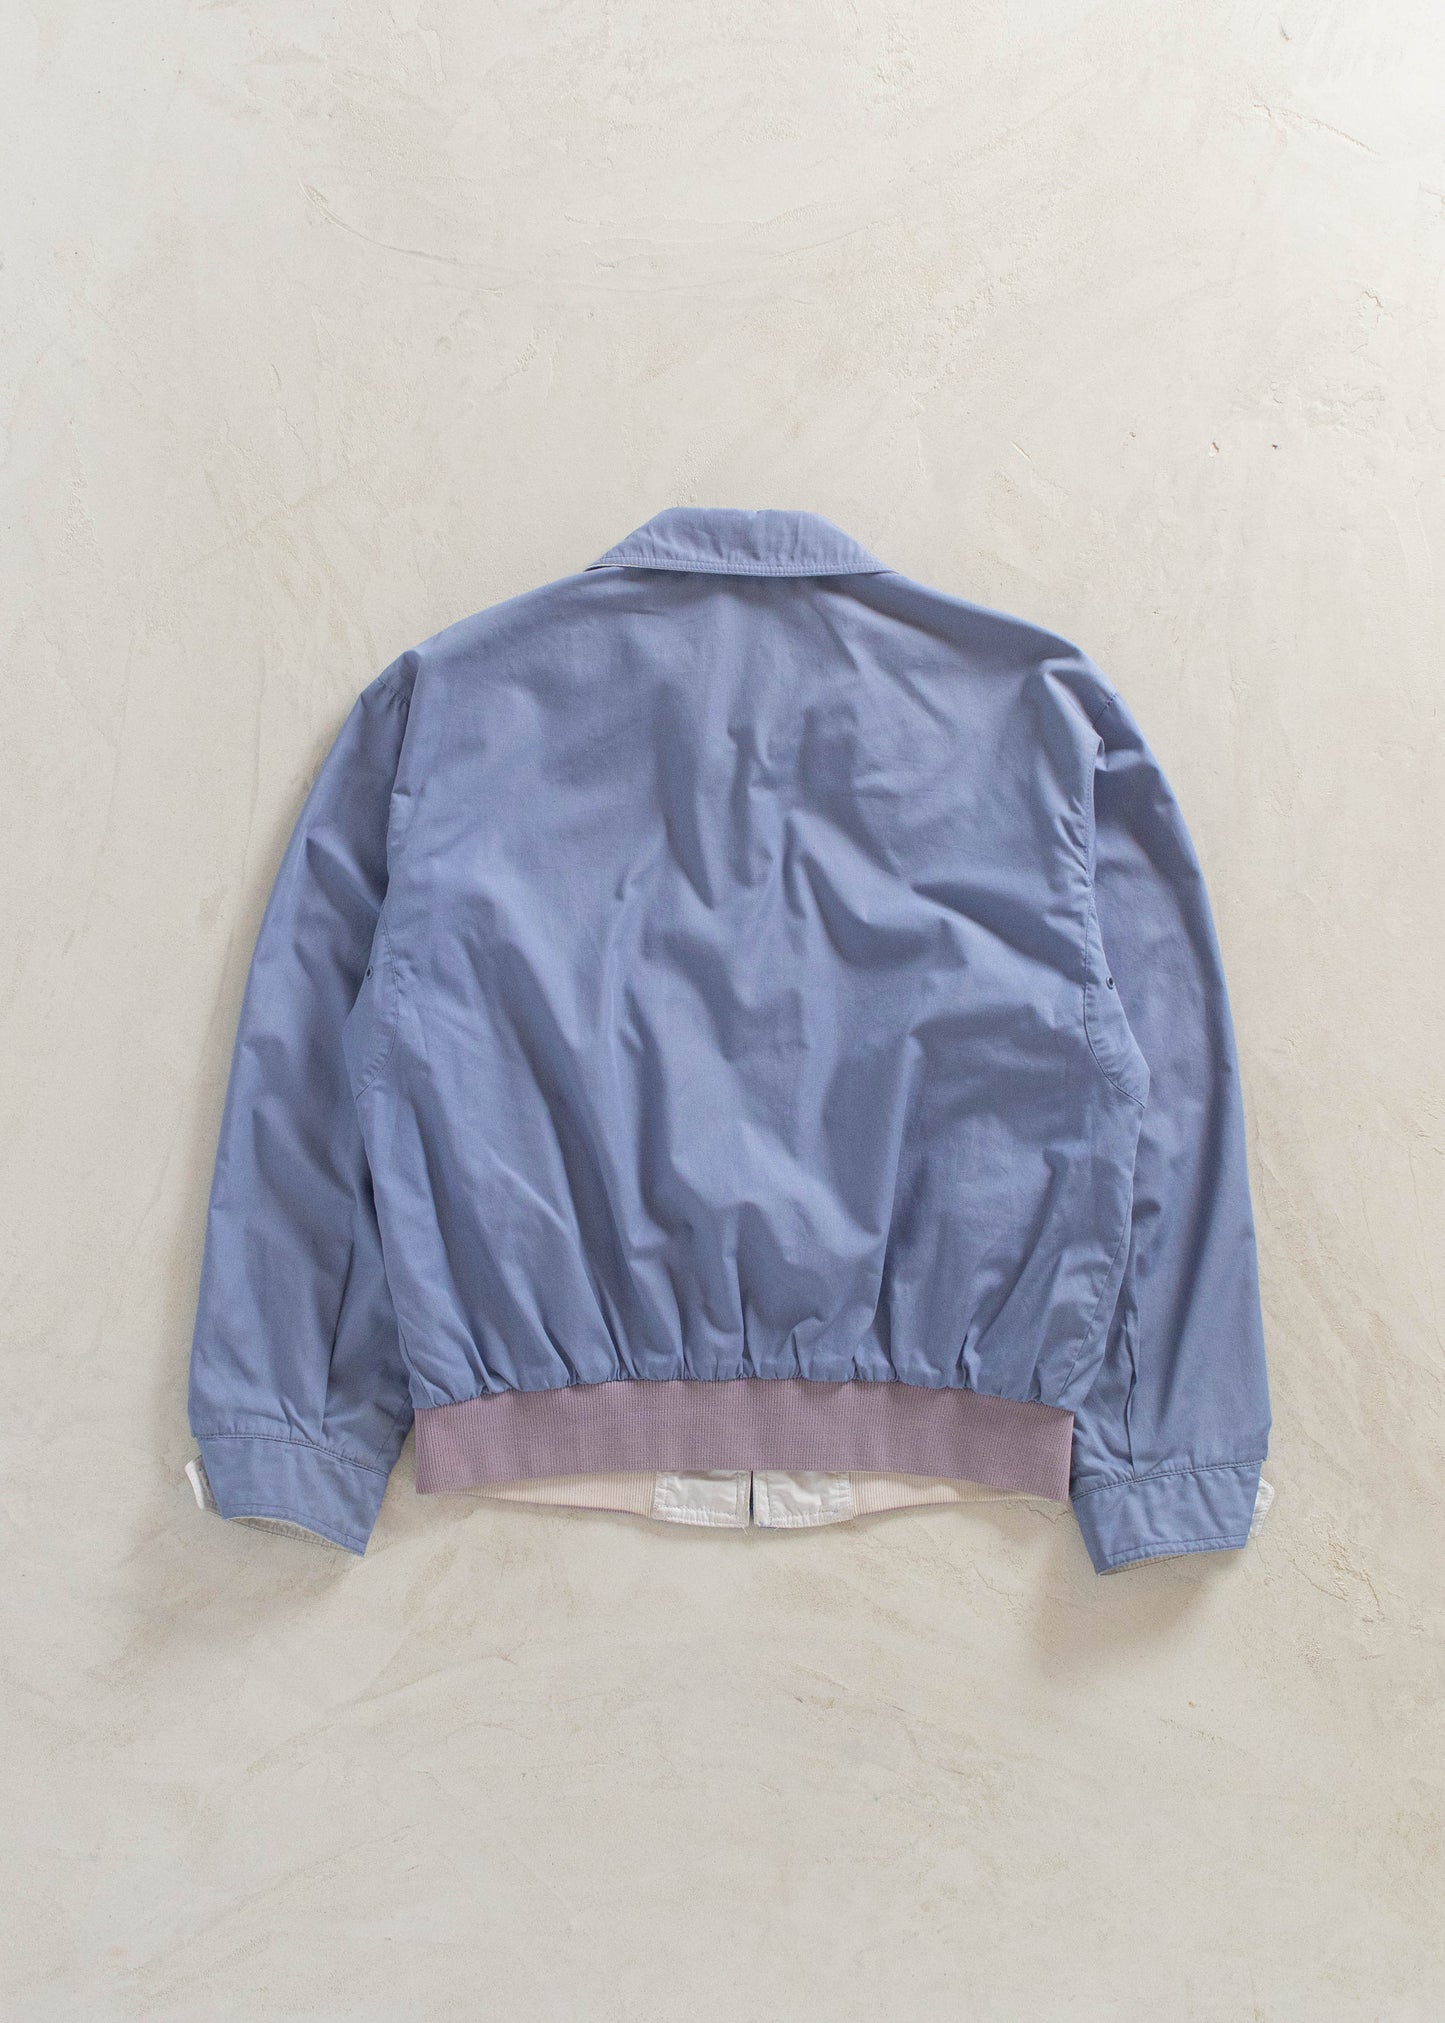 1980s Nylon Jacket Size M/L